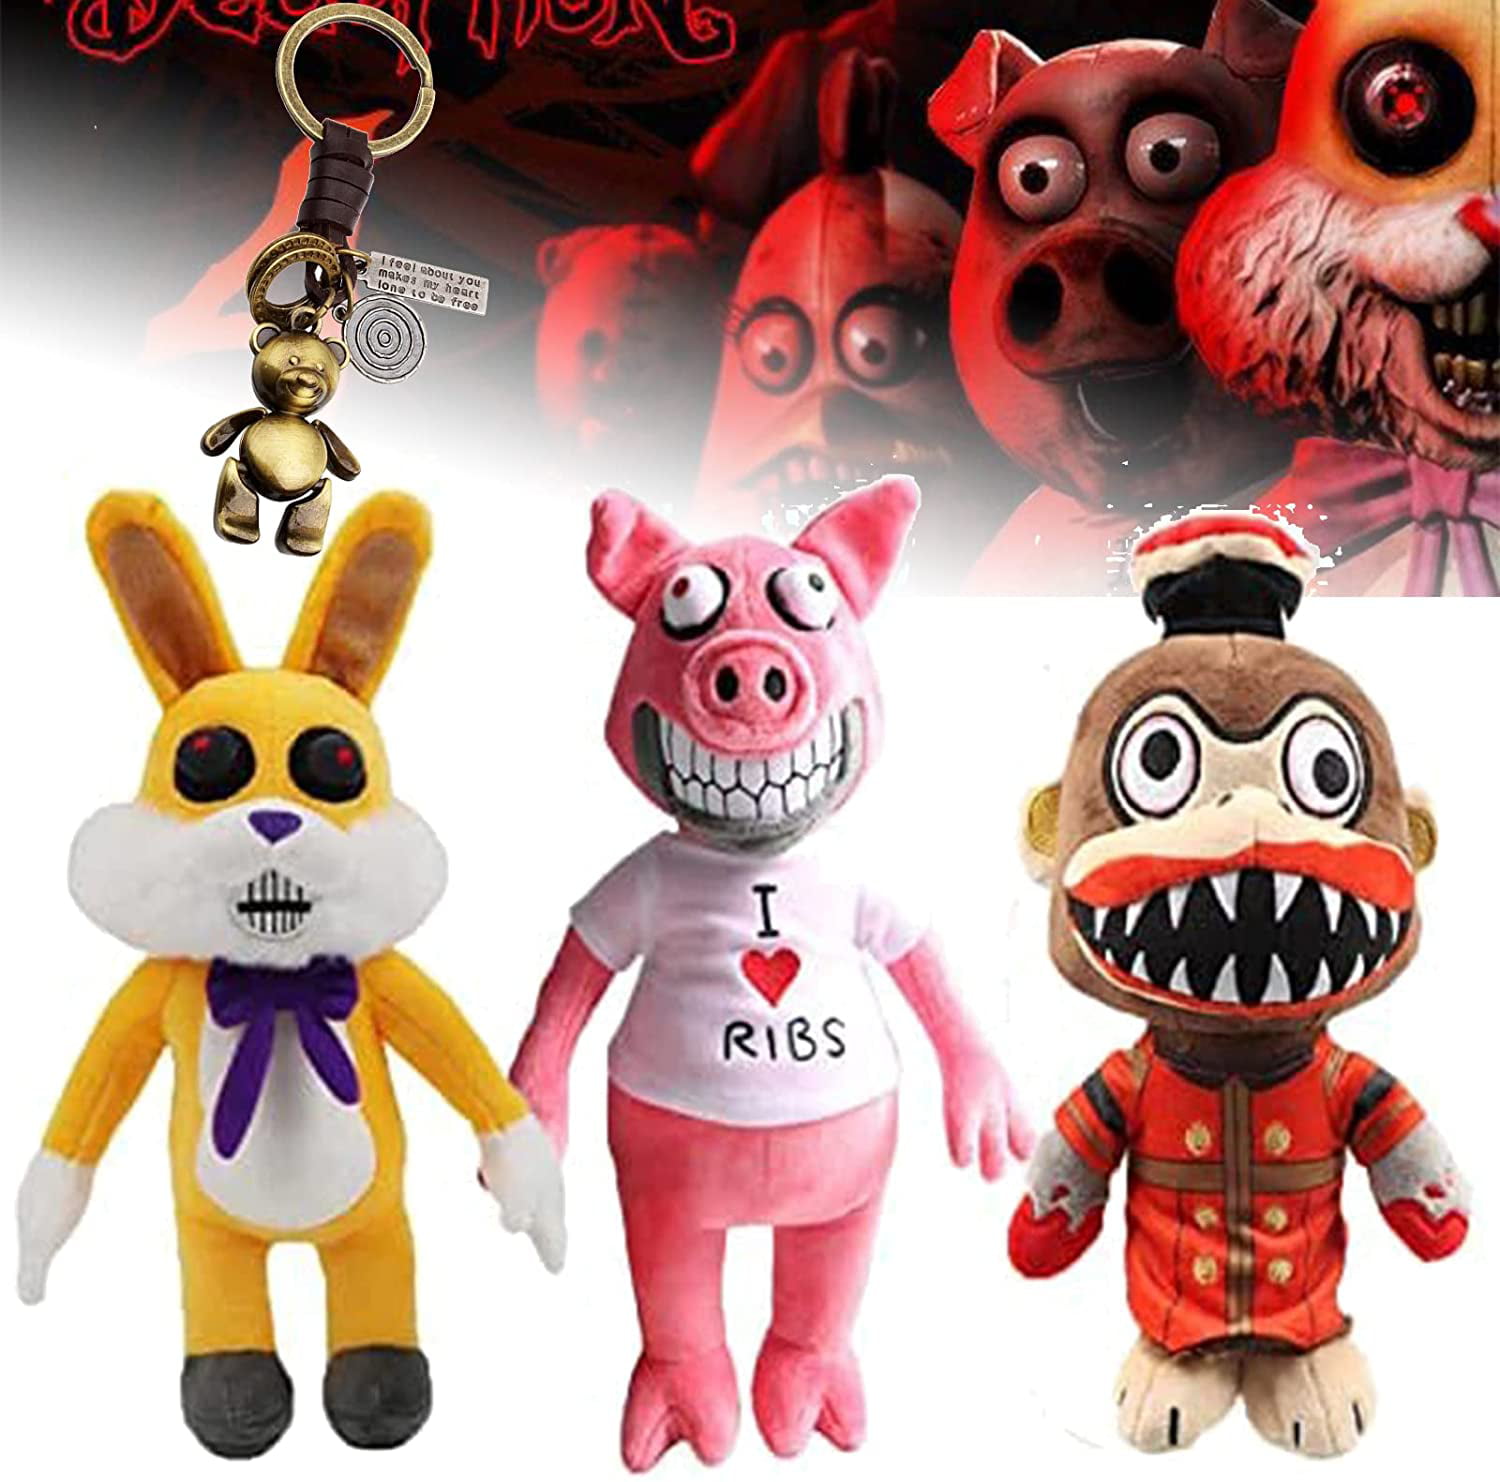 Dark Deception Dread Ducky Plush Toy Murder Monkey Reaper Pig Stuffed Doll Gifts